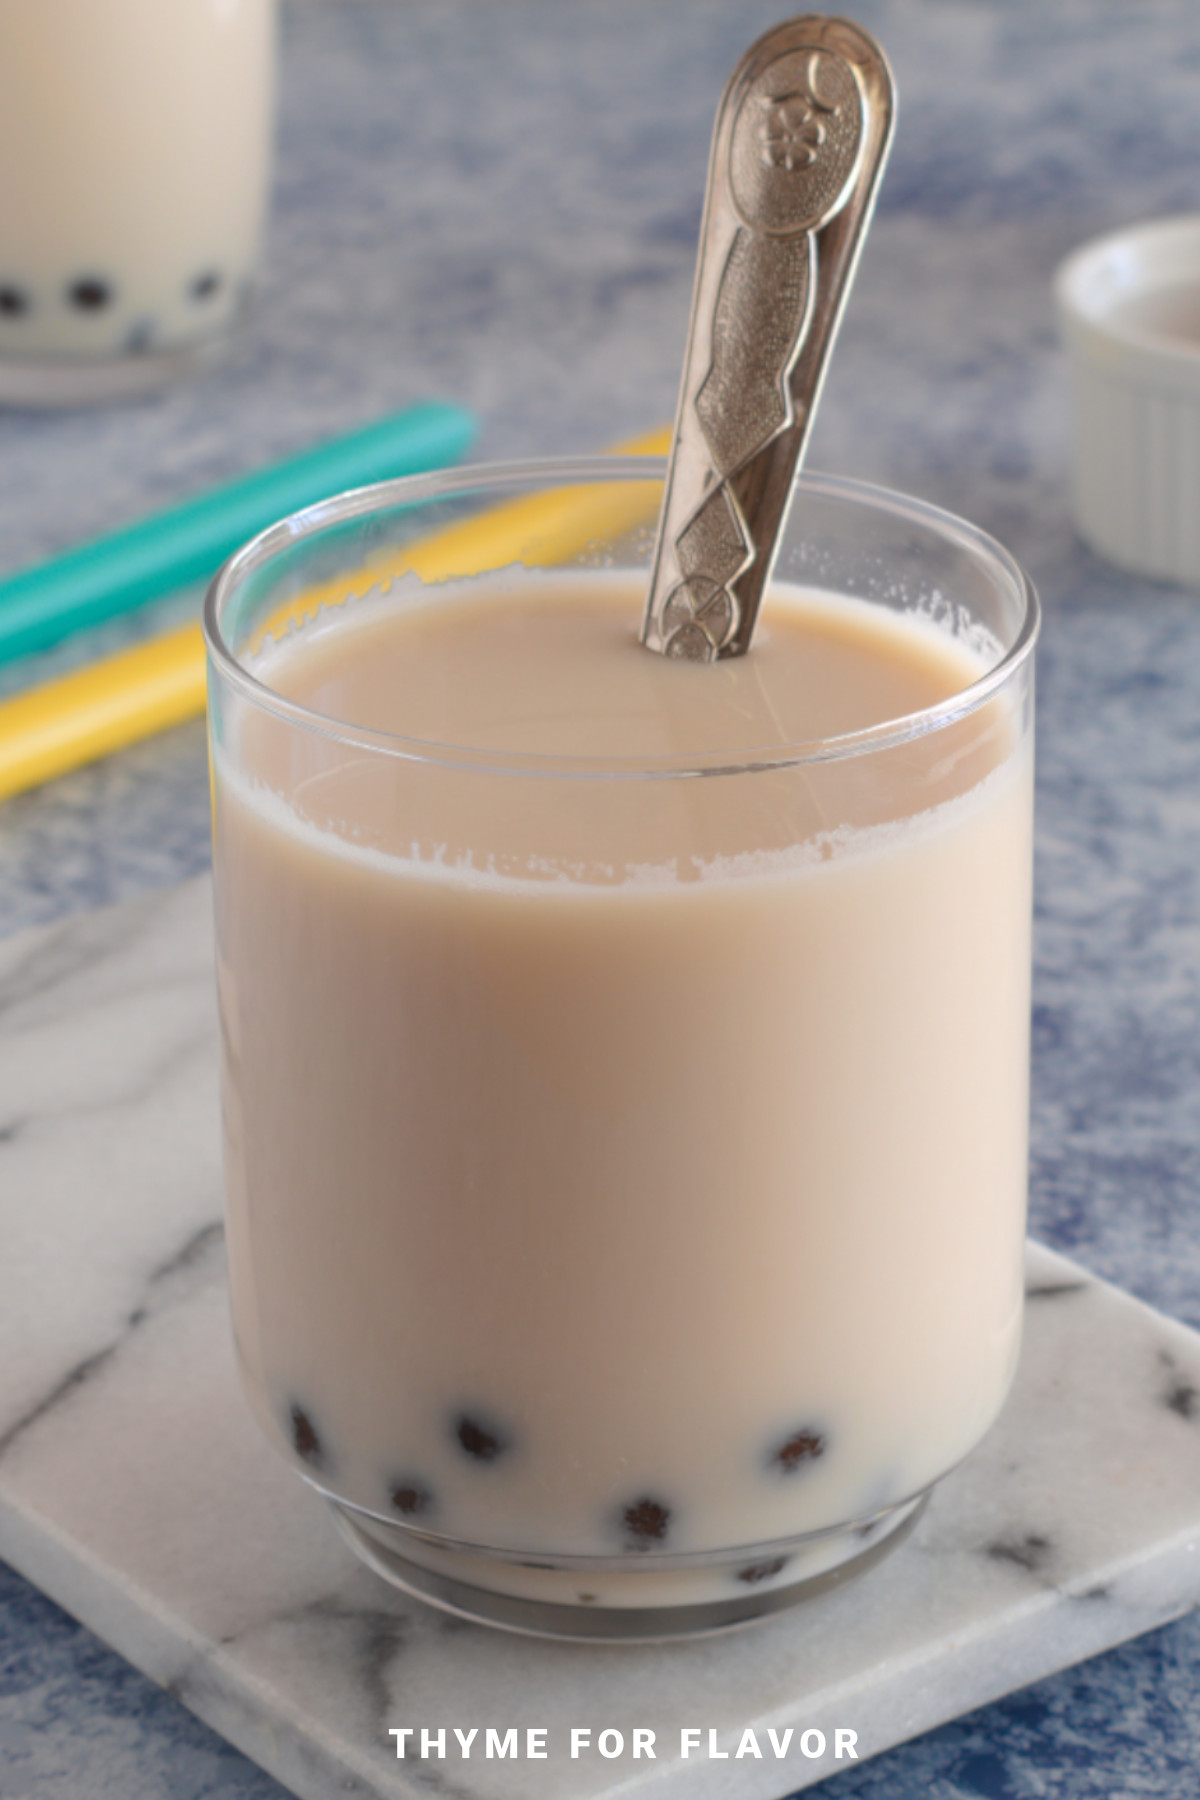 A glass of caramel milk tea with tapioca pearls.